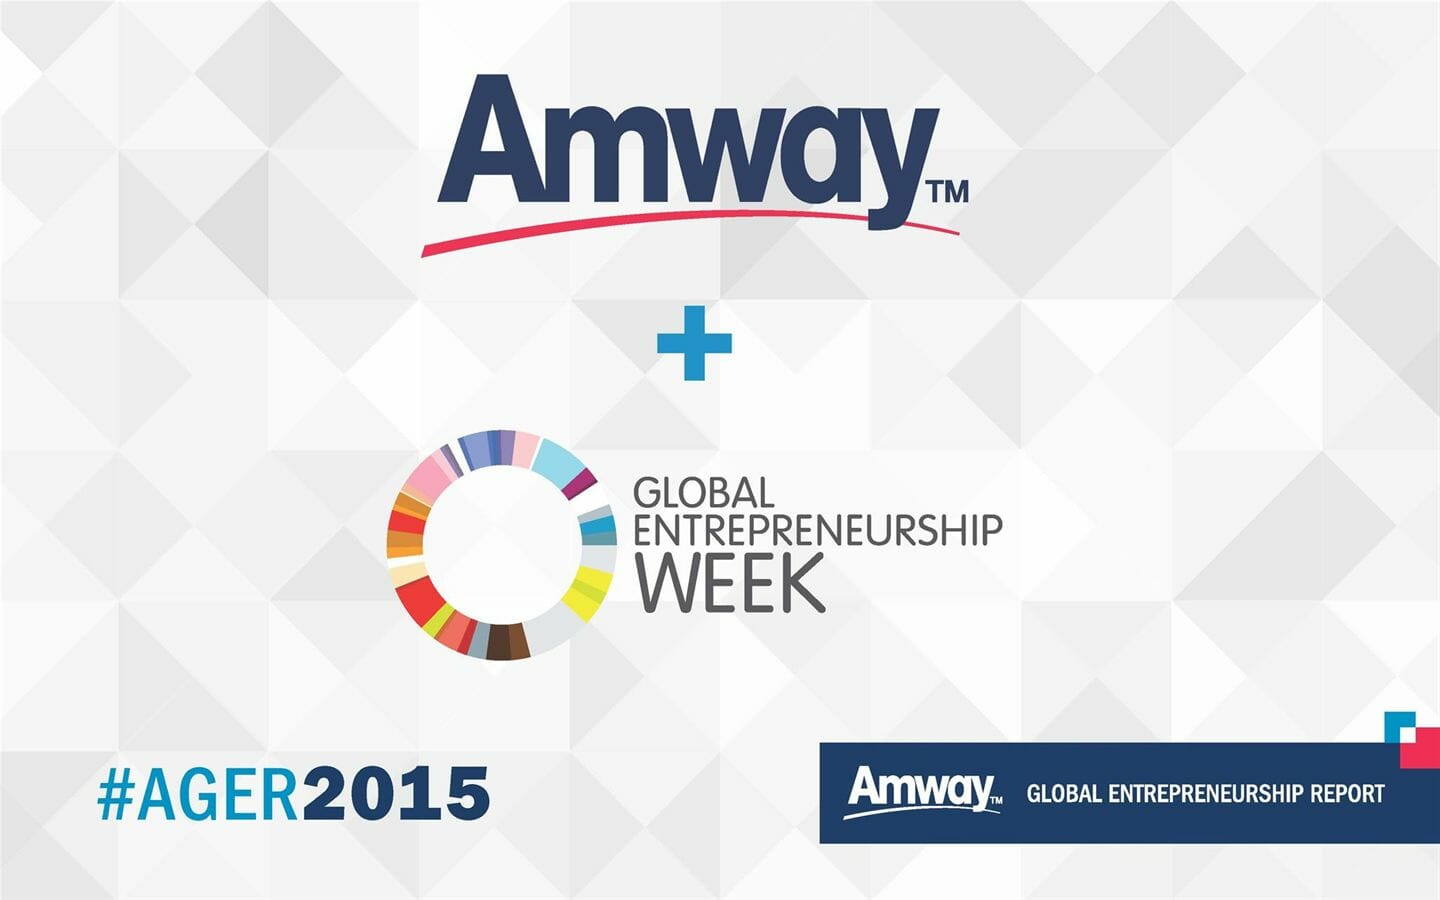 Amway + Global Entrepreneurship Week #AGER2015